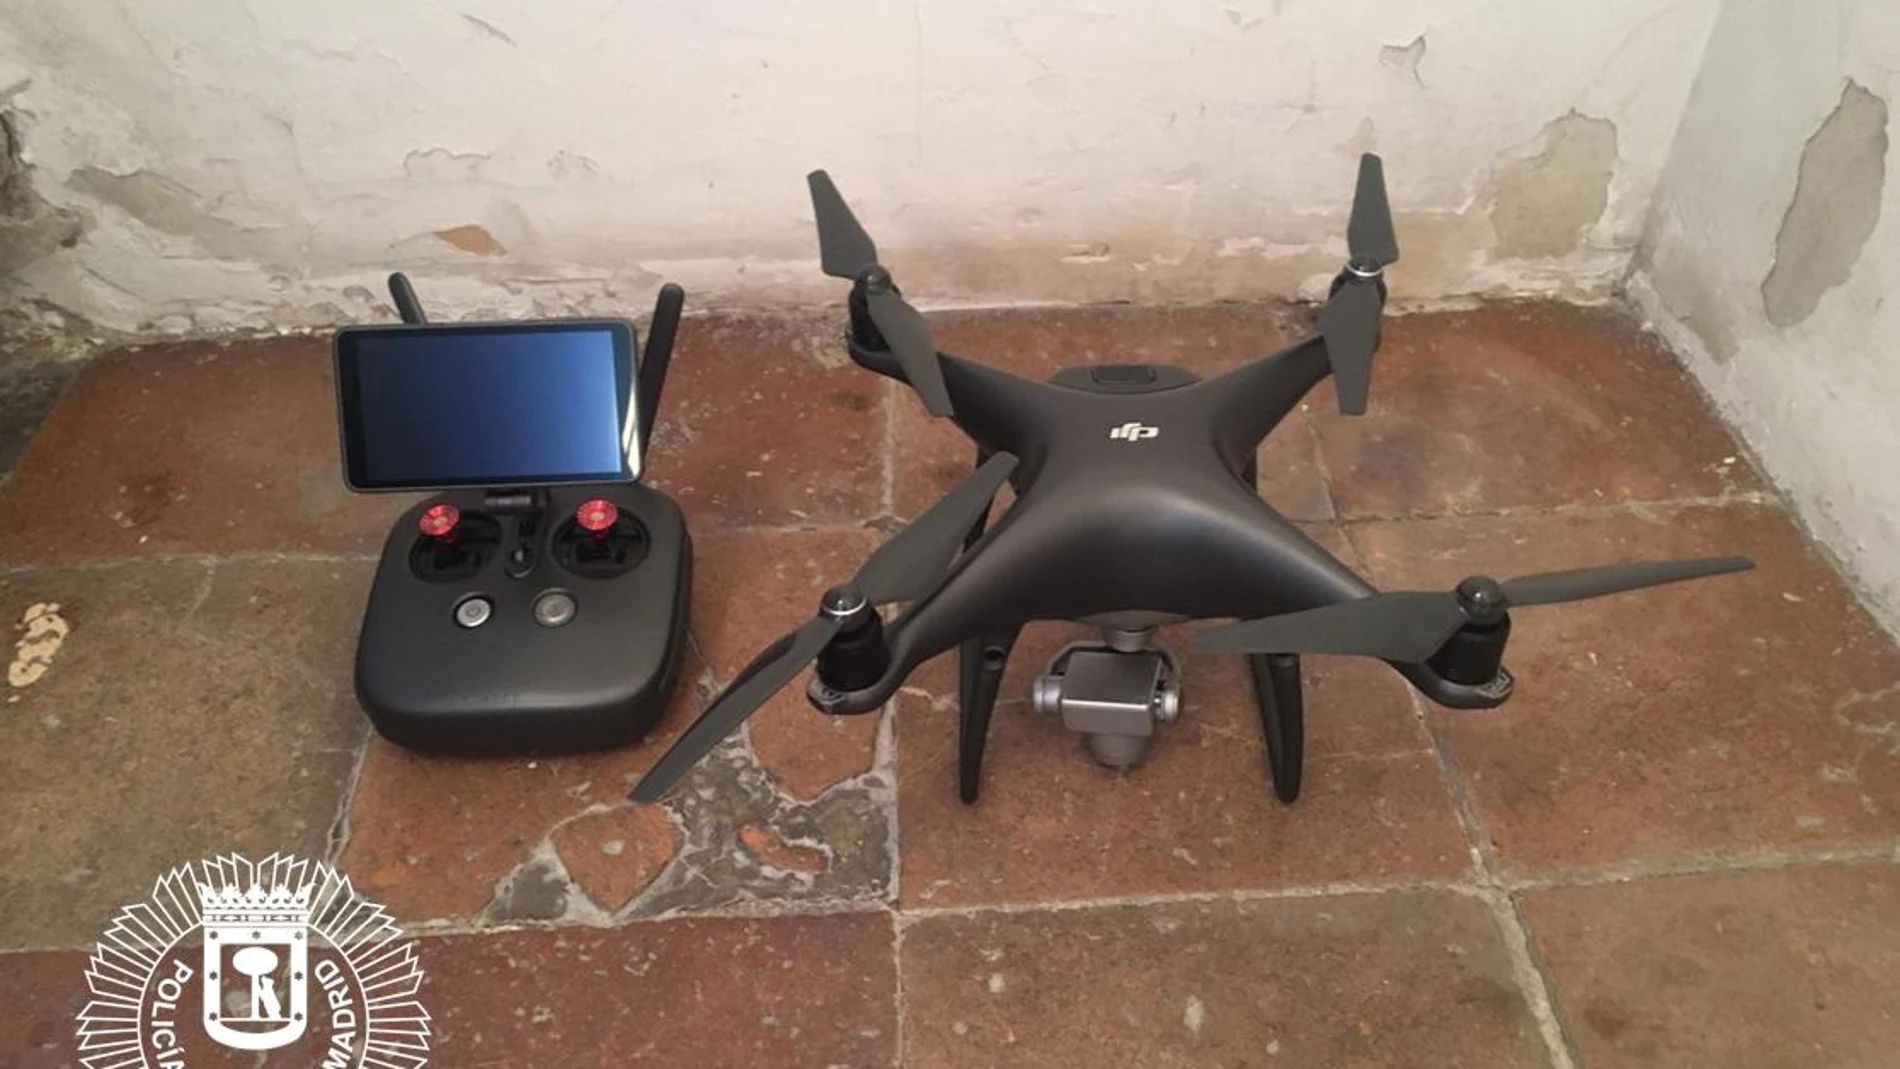 Sucesos.- Denuncian a un hombre estadounidense por sobrevolar "sin autorización" un dron en plena Plaza Mayor